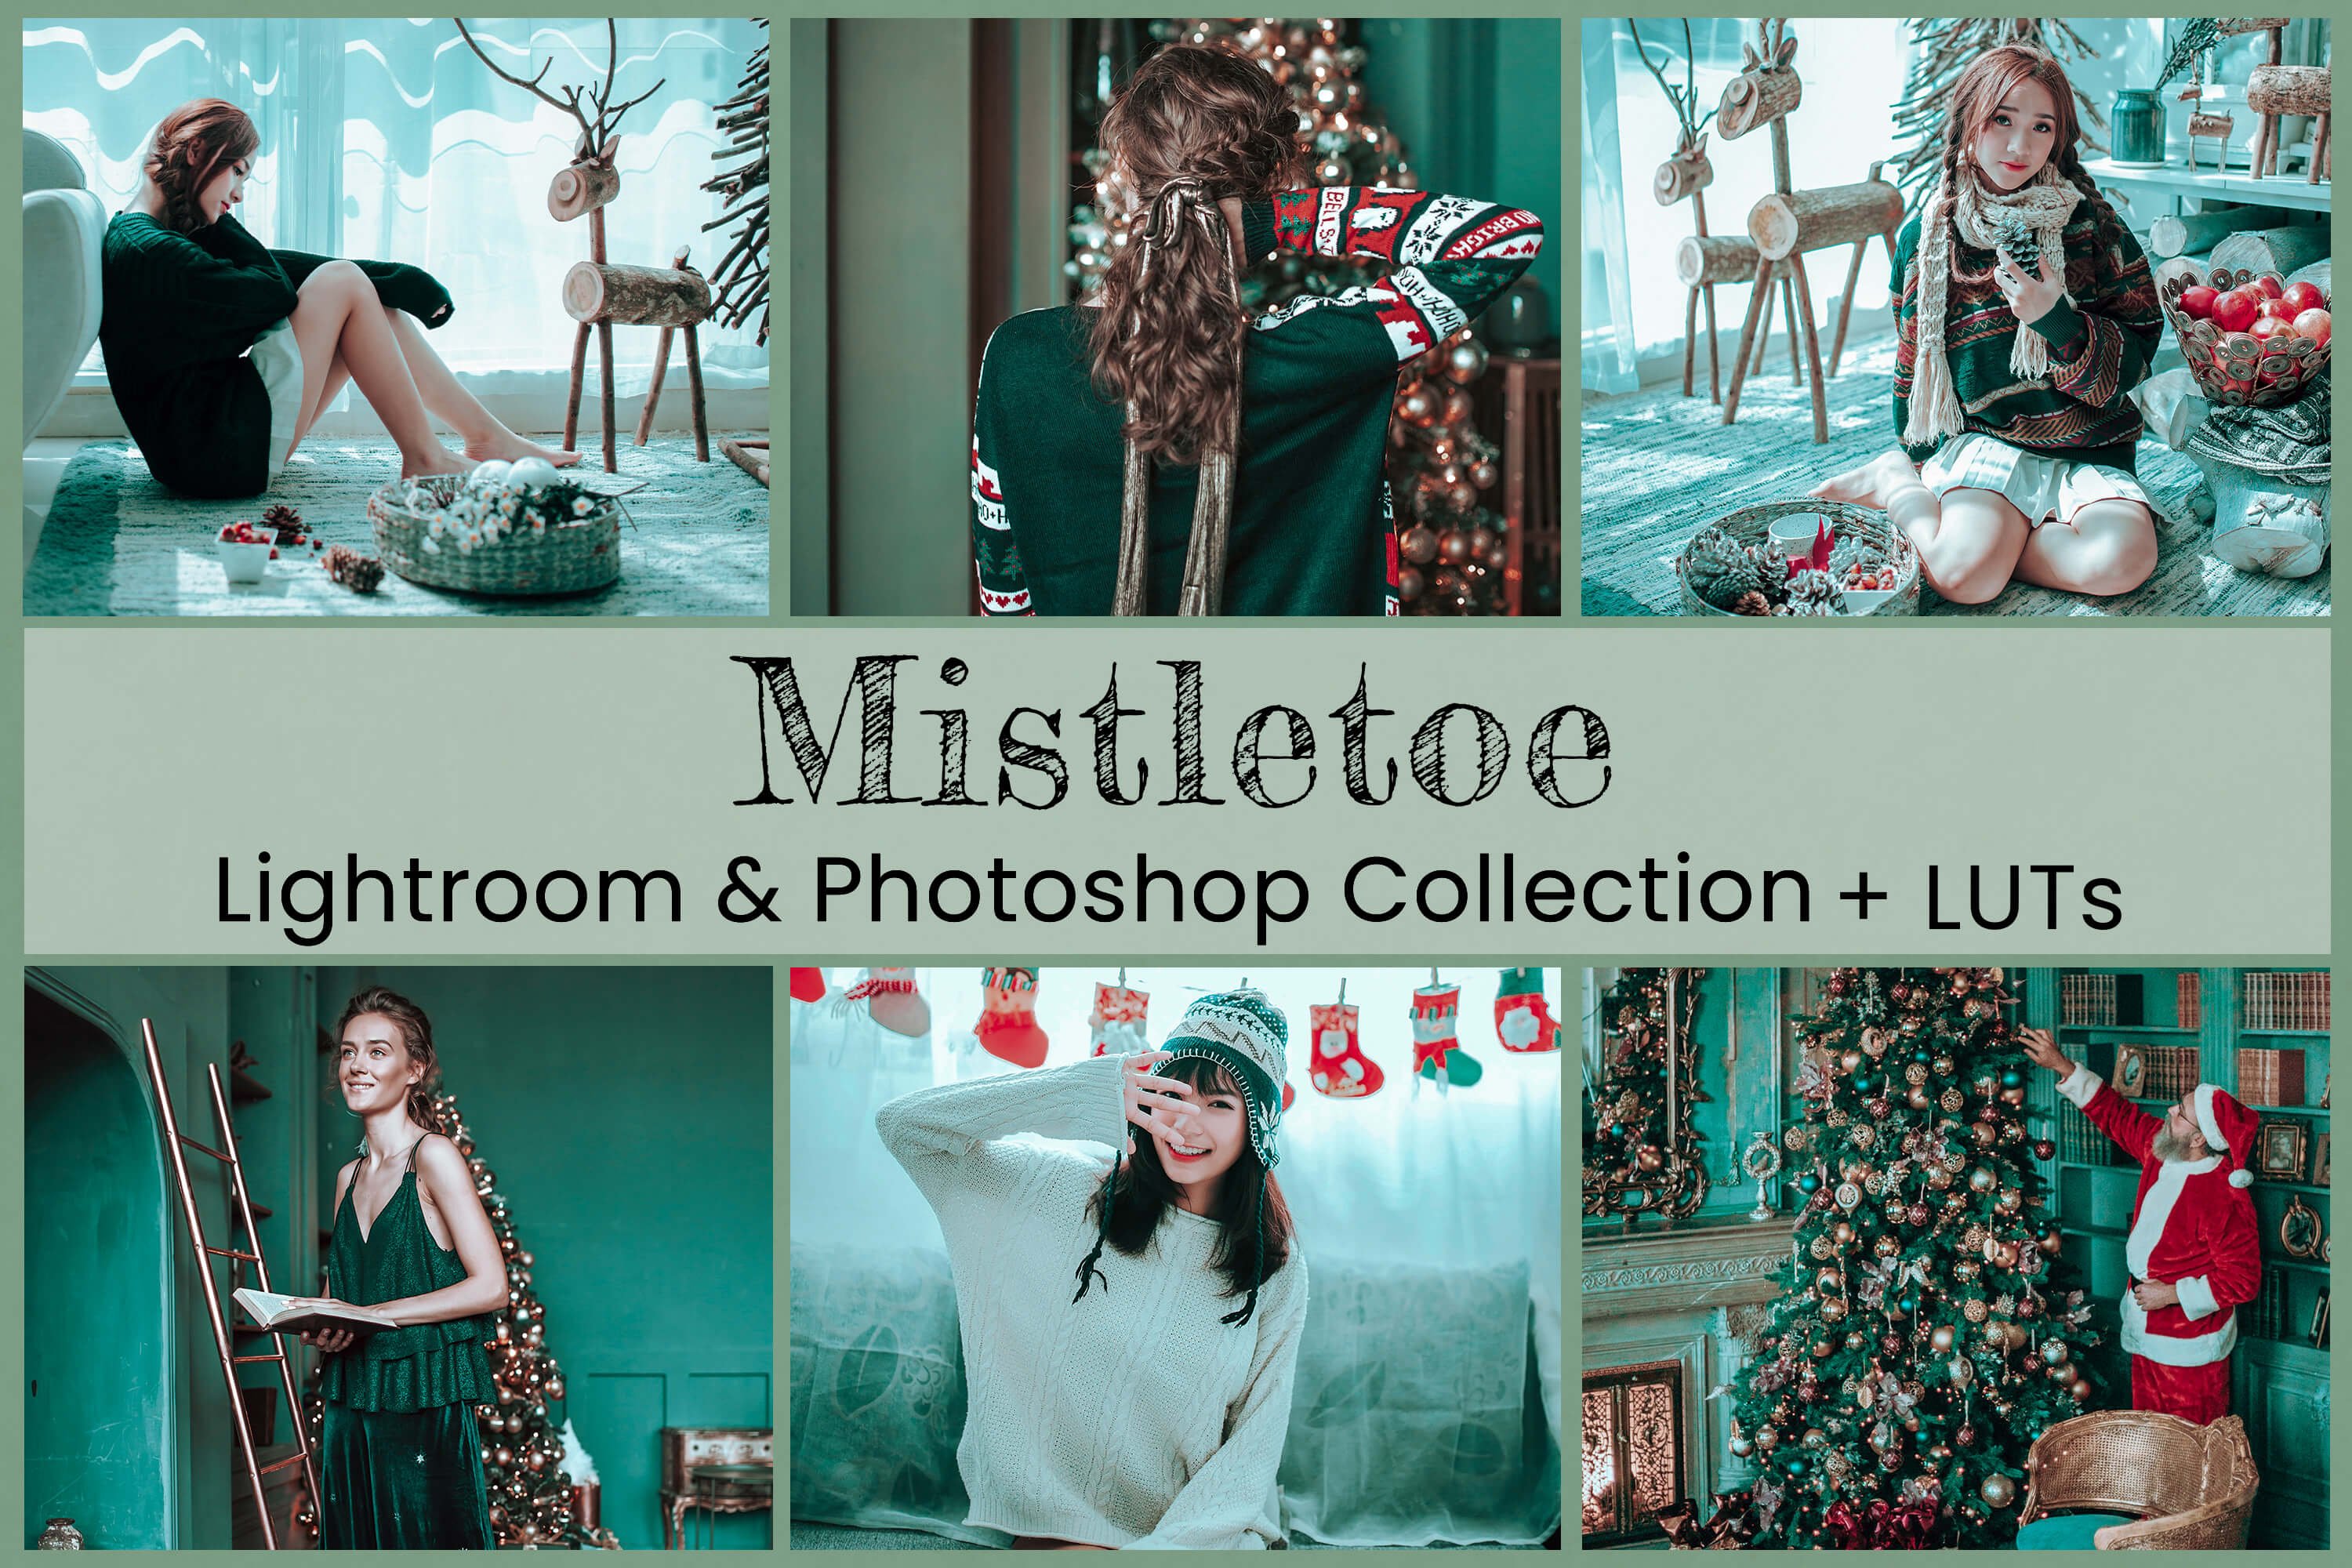 Mistletoe Lightroom Photoshop LUTscover image.